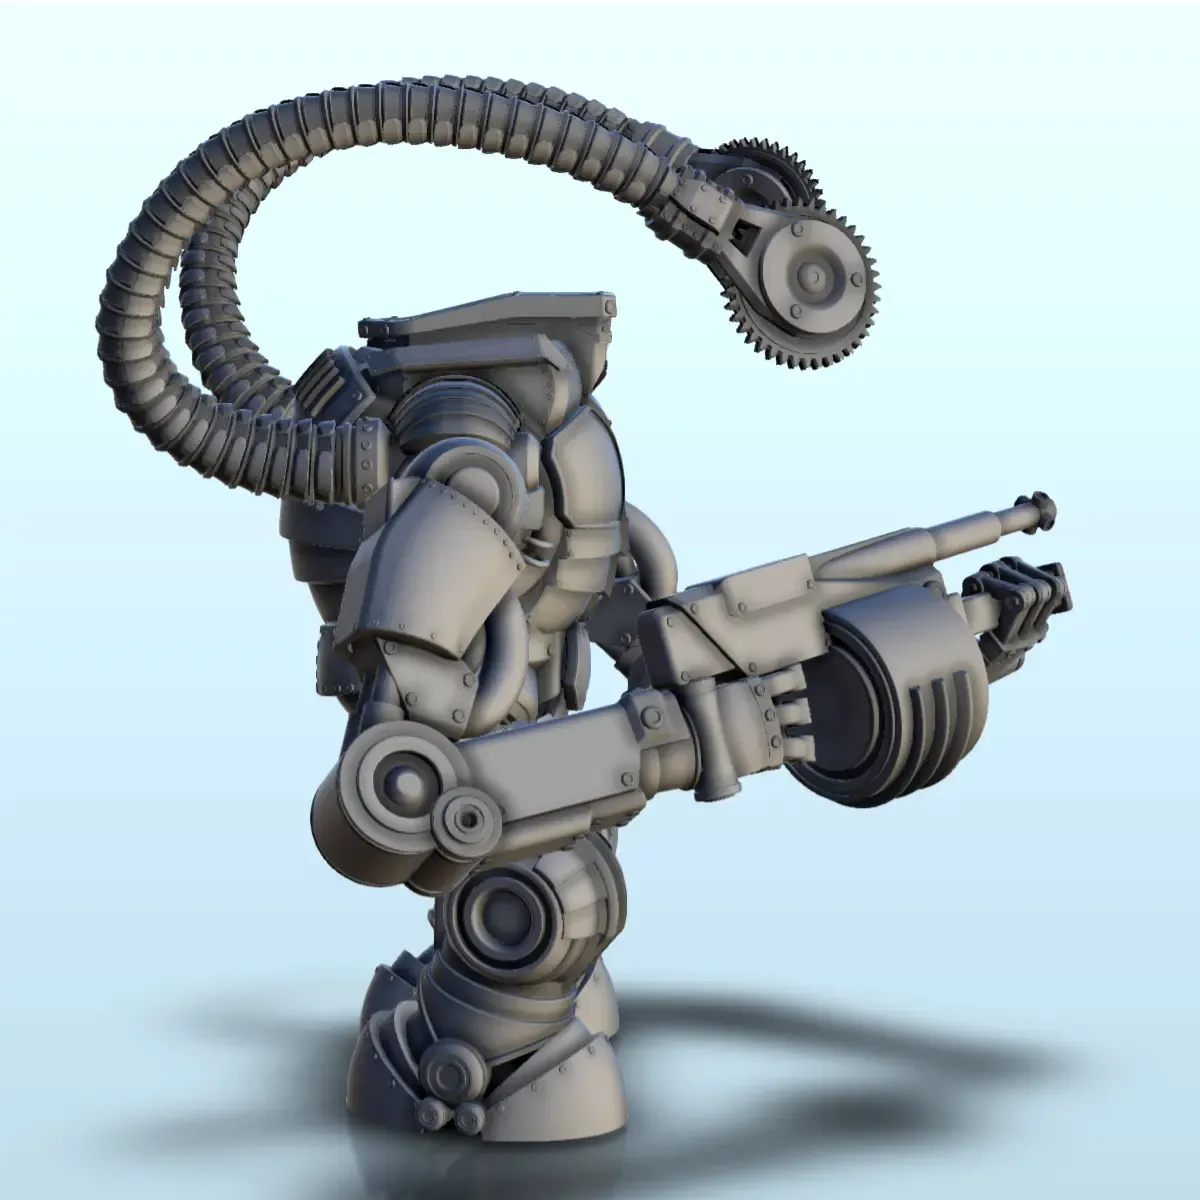 Phiterin combat robot (28) - sci-fi science fiction future 4